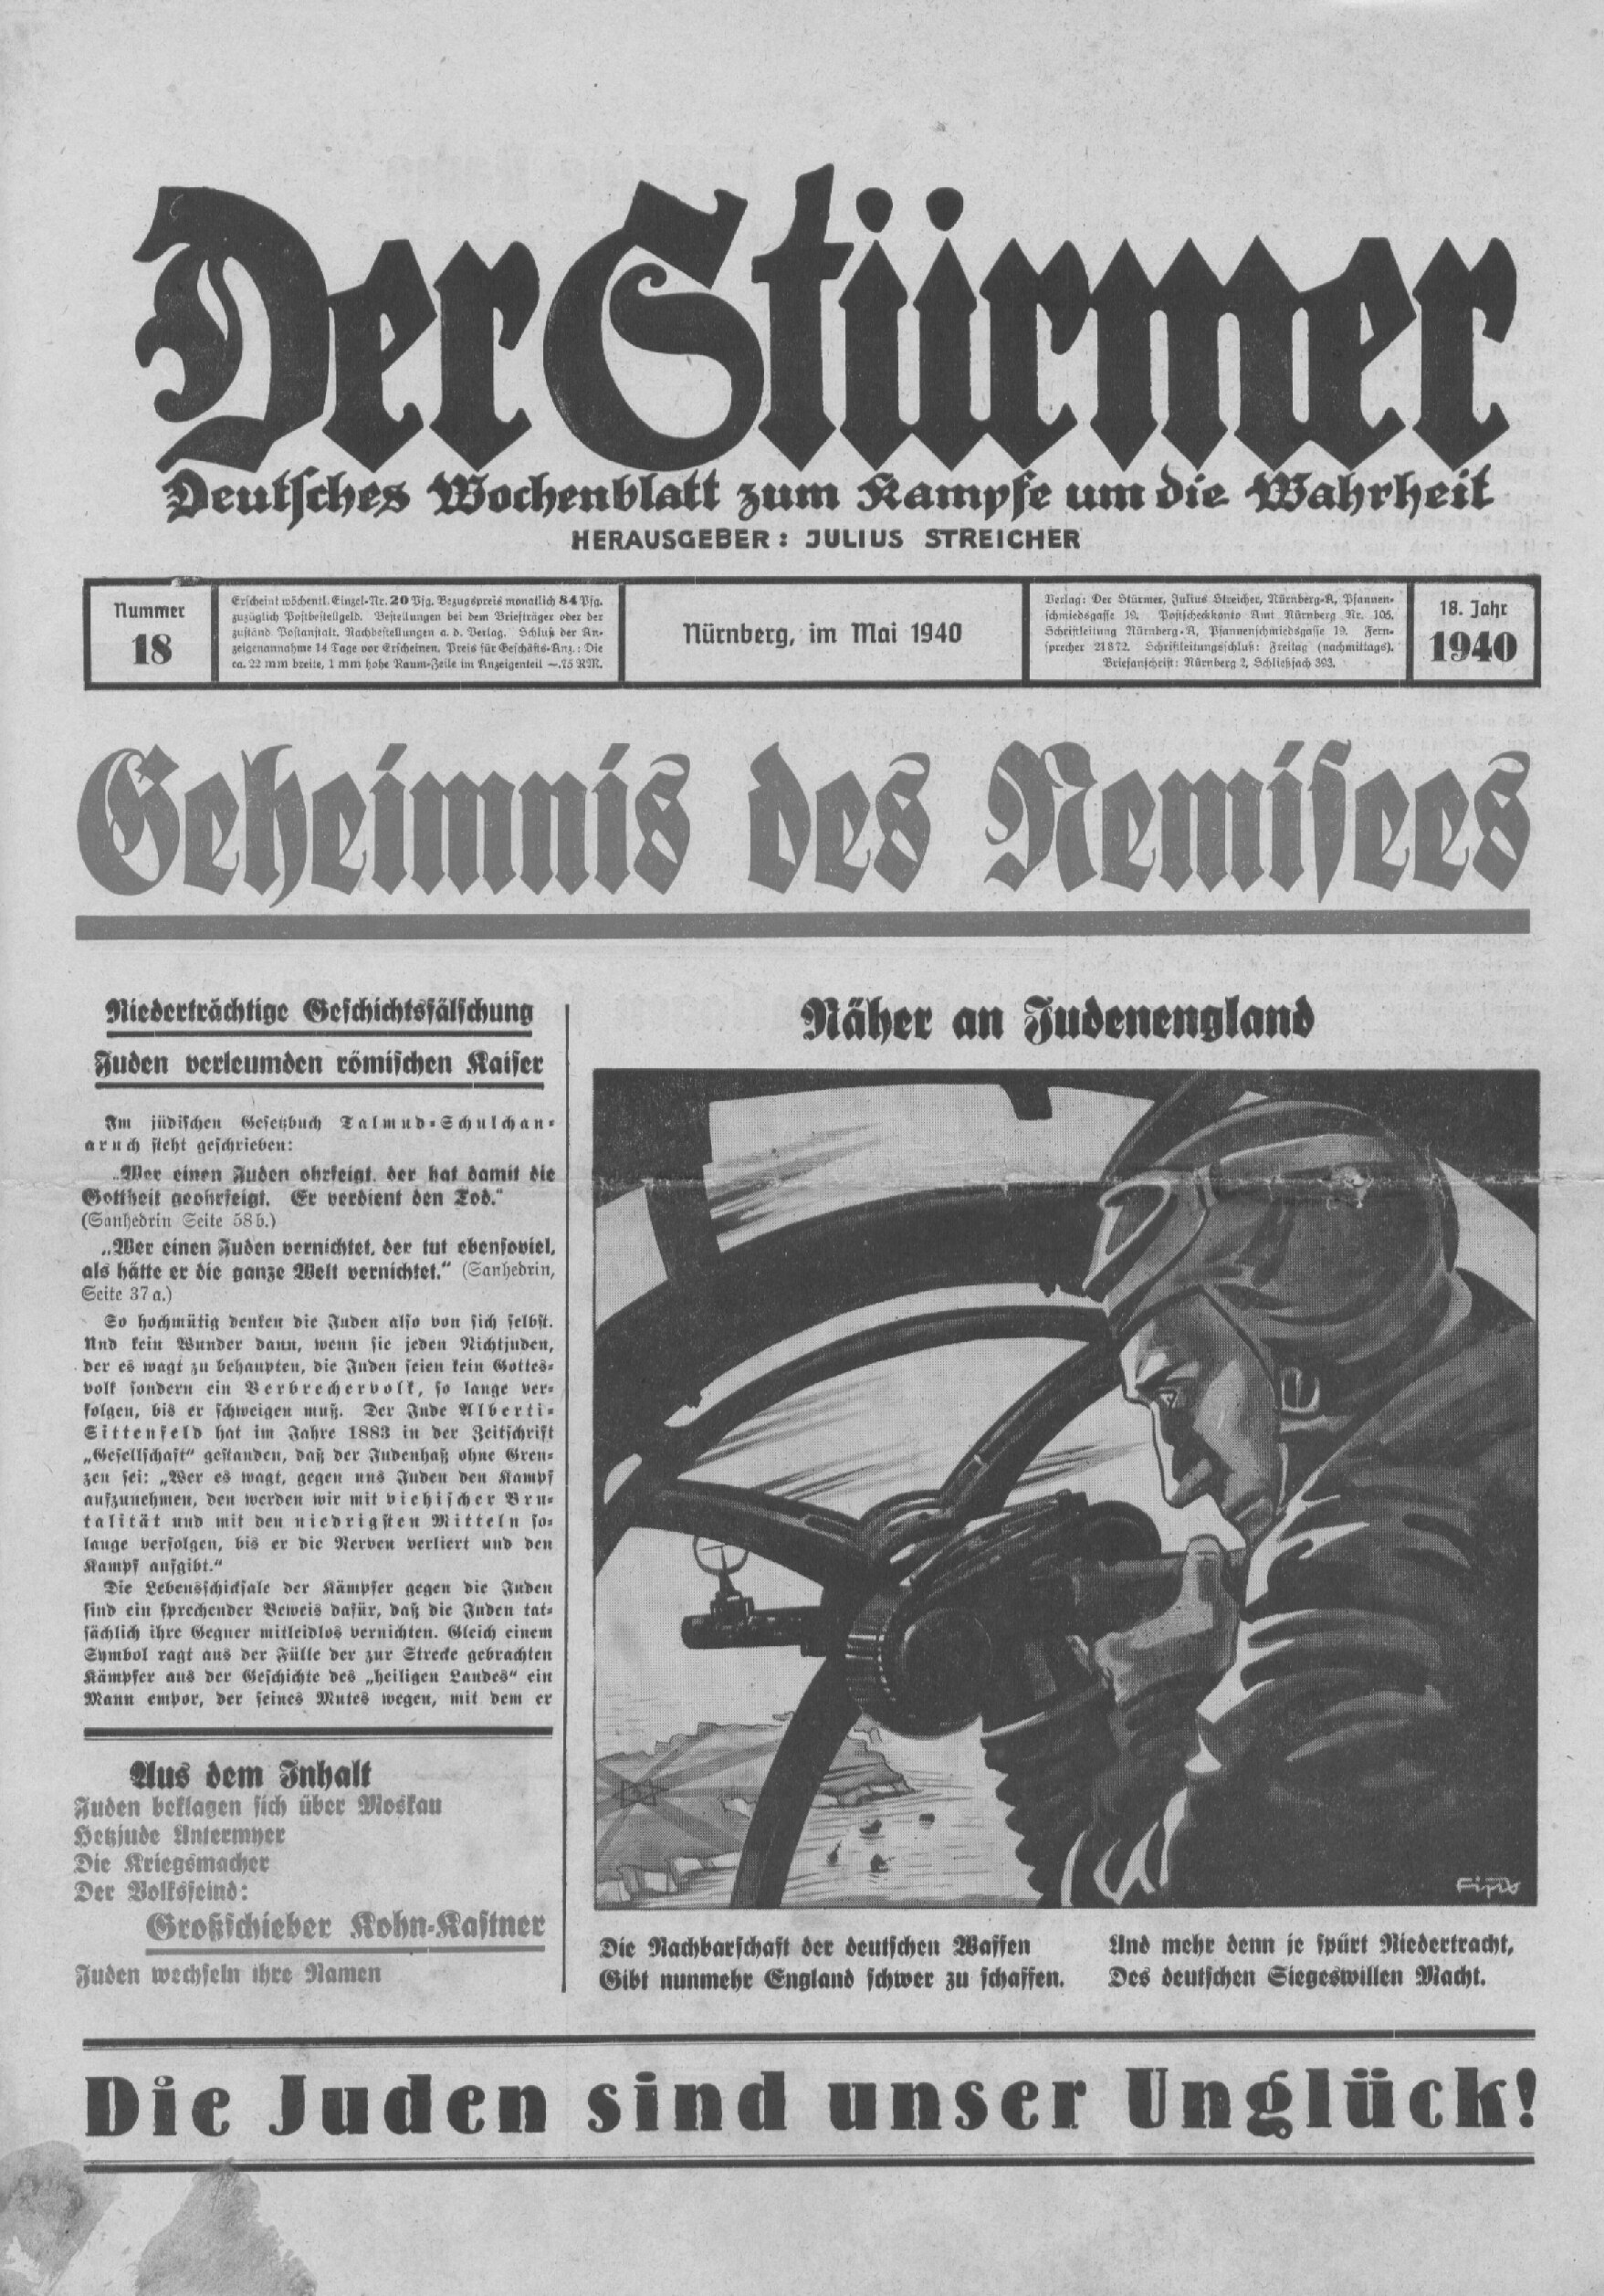 Der Stürmer - 1940 Nr. 18 - Geheimnis des Remisees